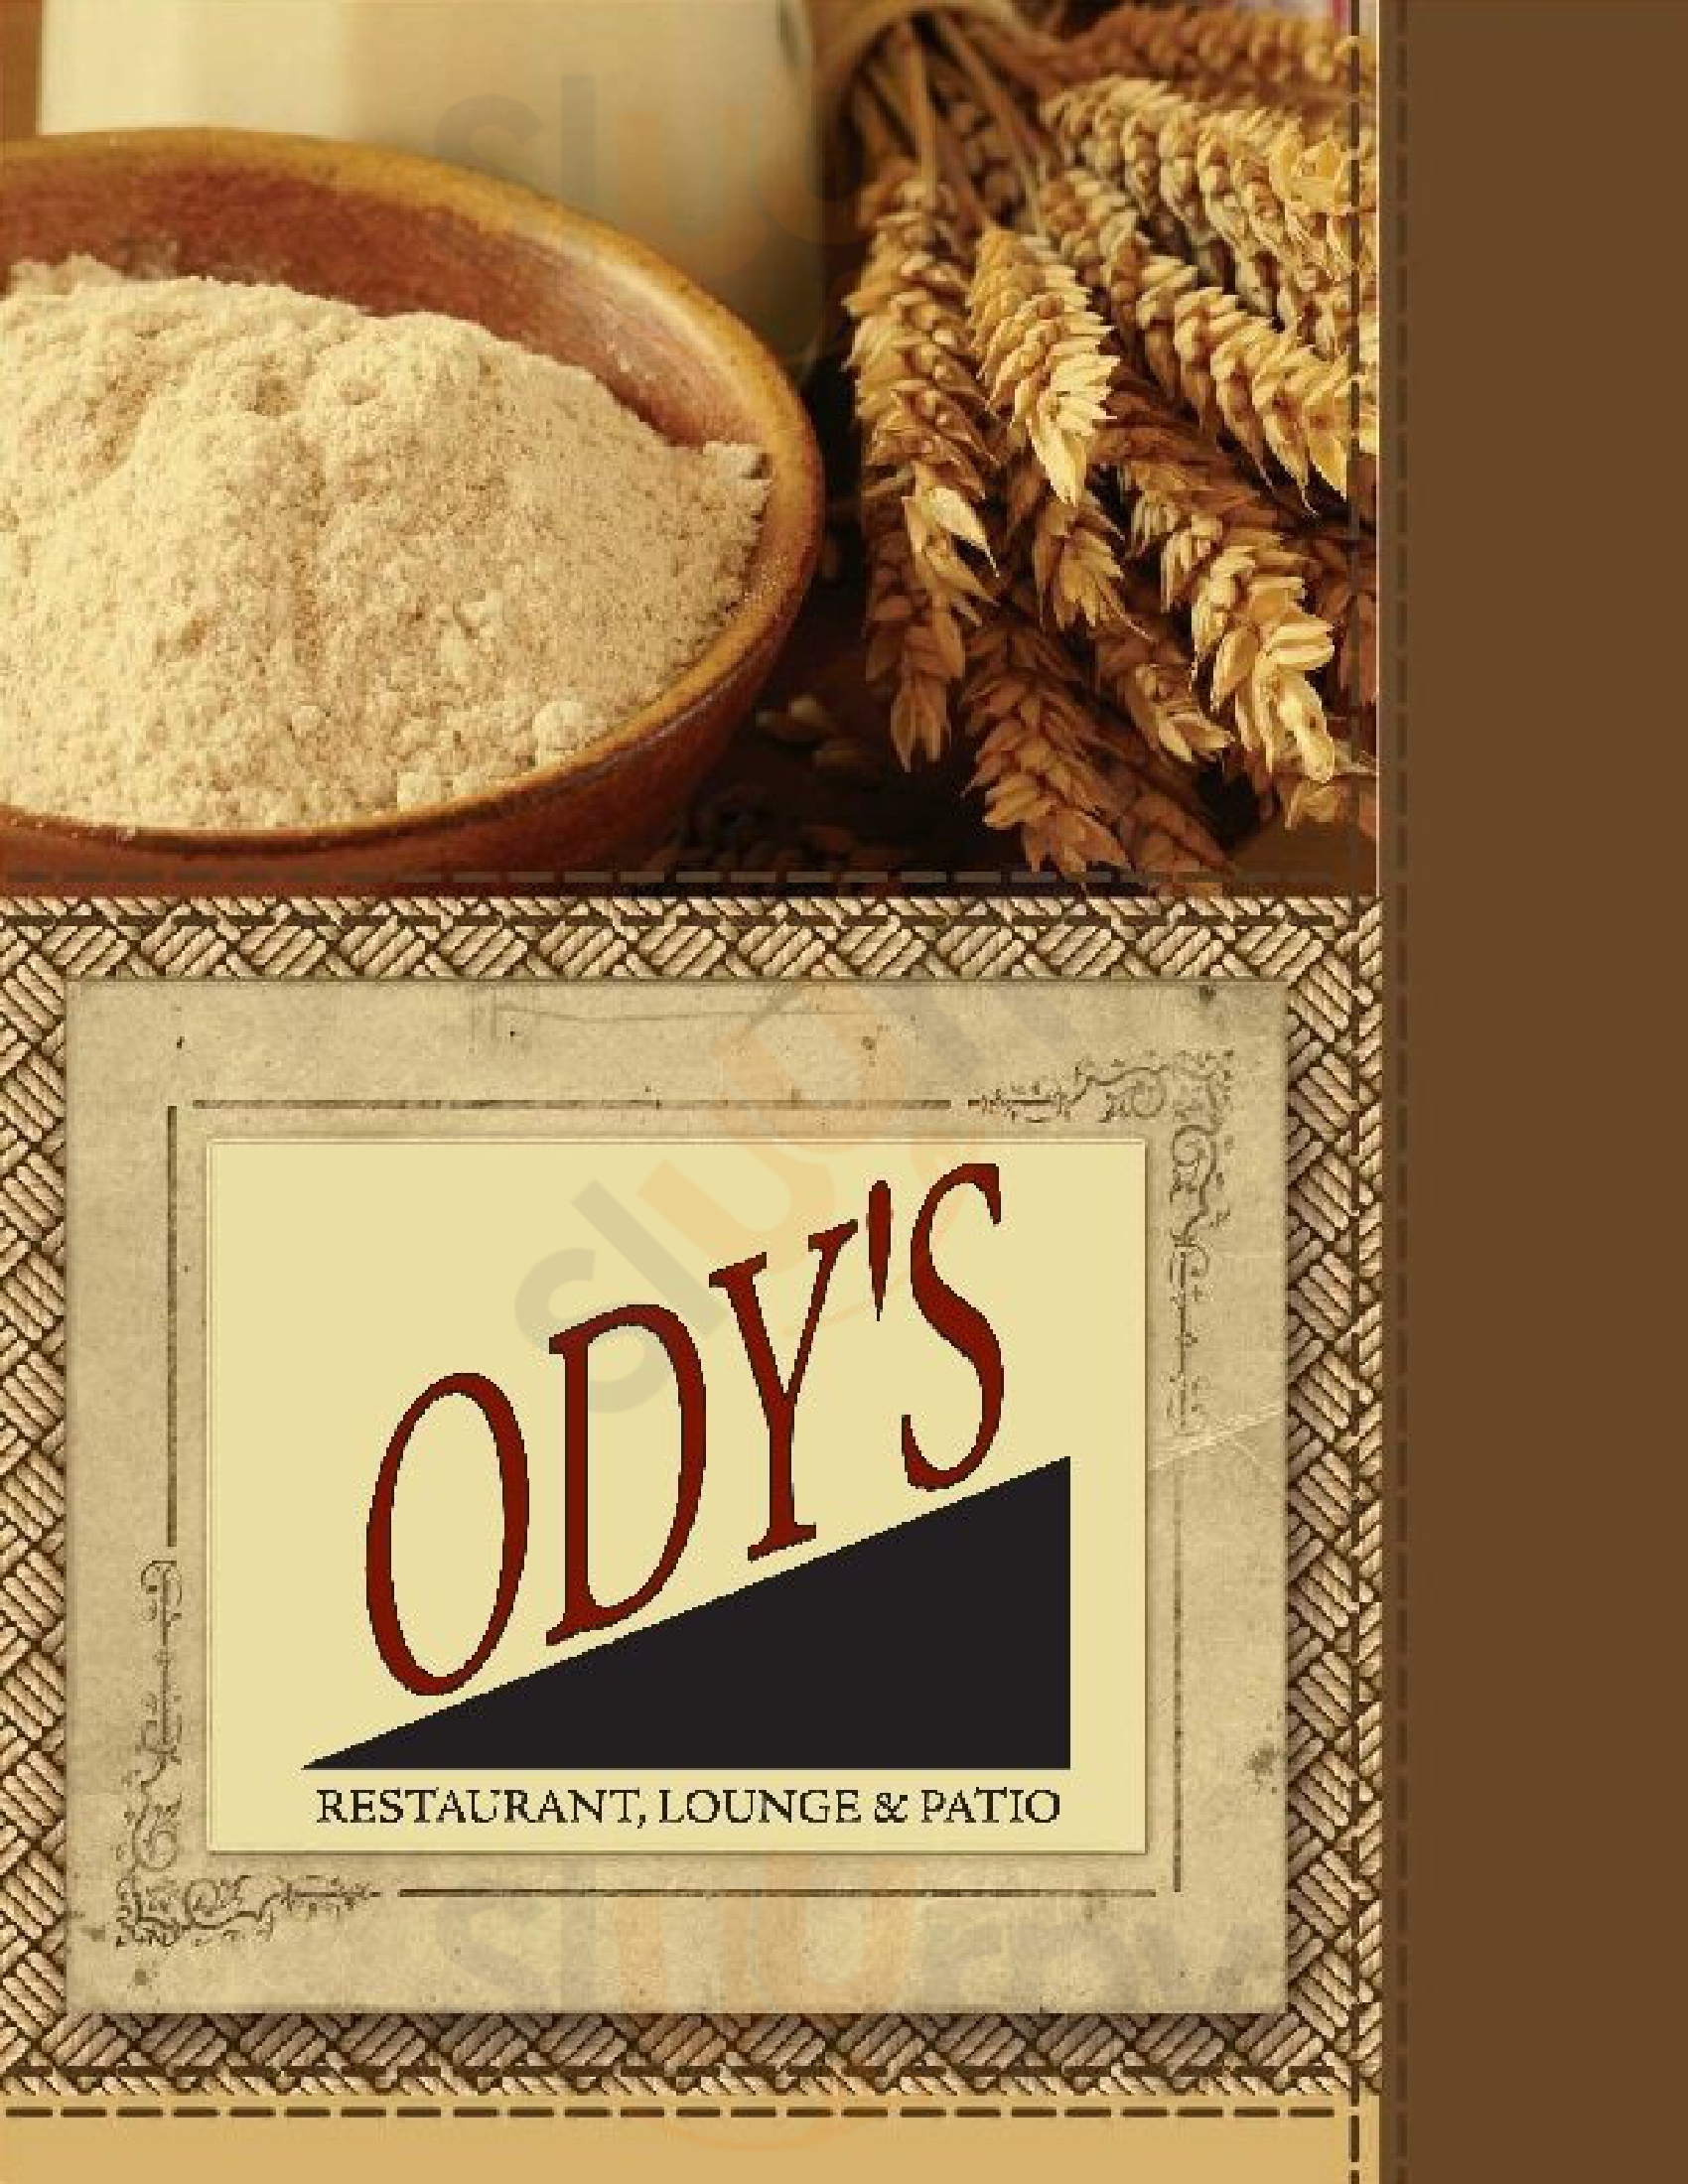 Odys Restaurant Lounge & Patio Woodstock Menu - 1